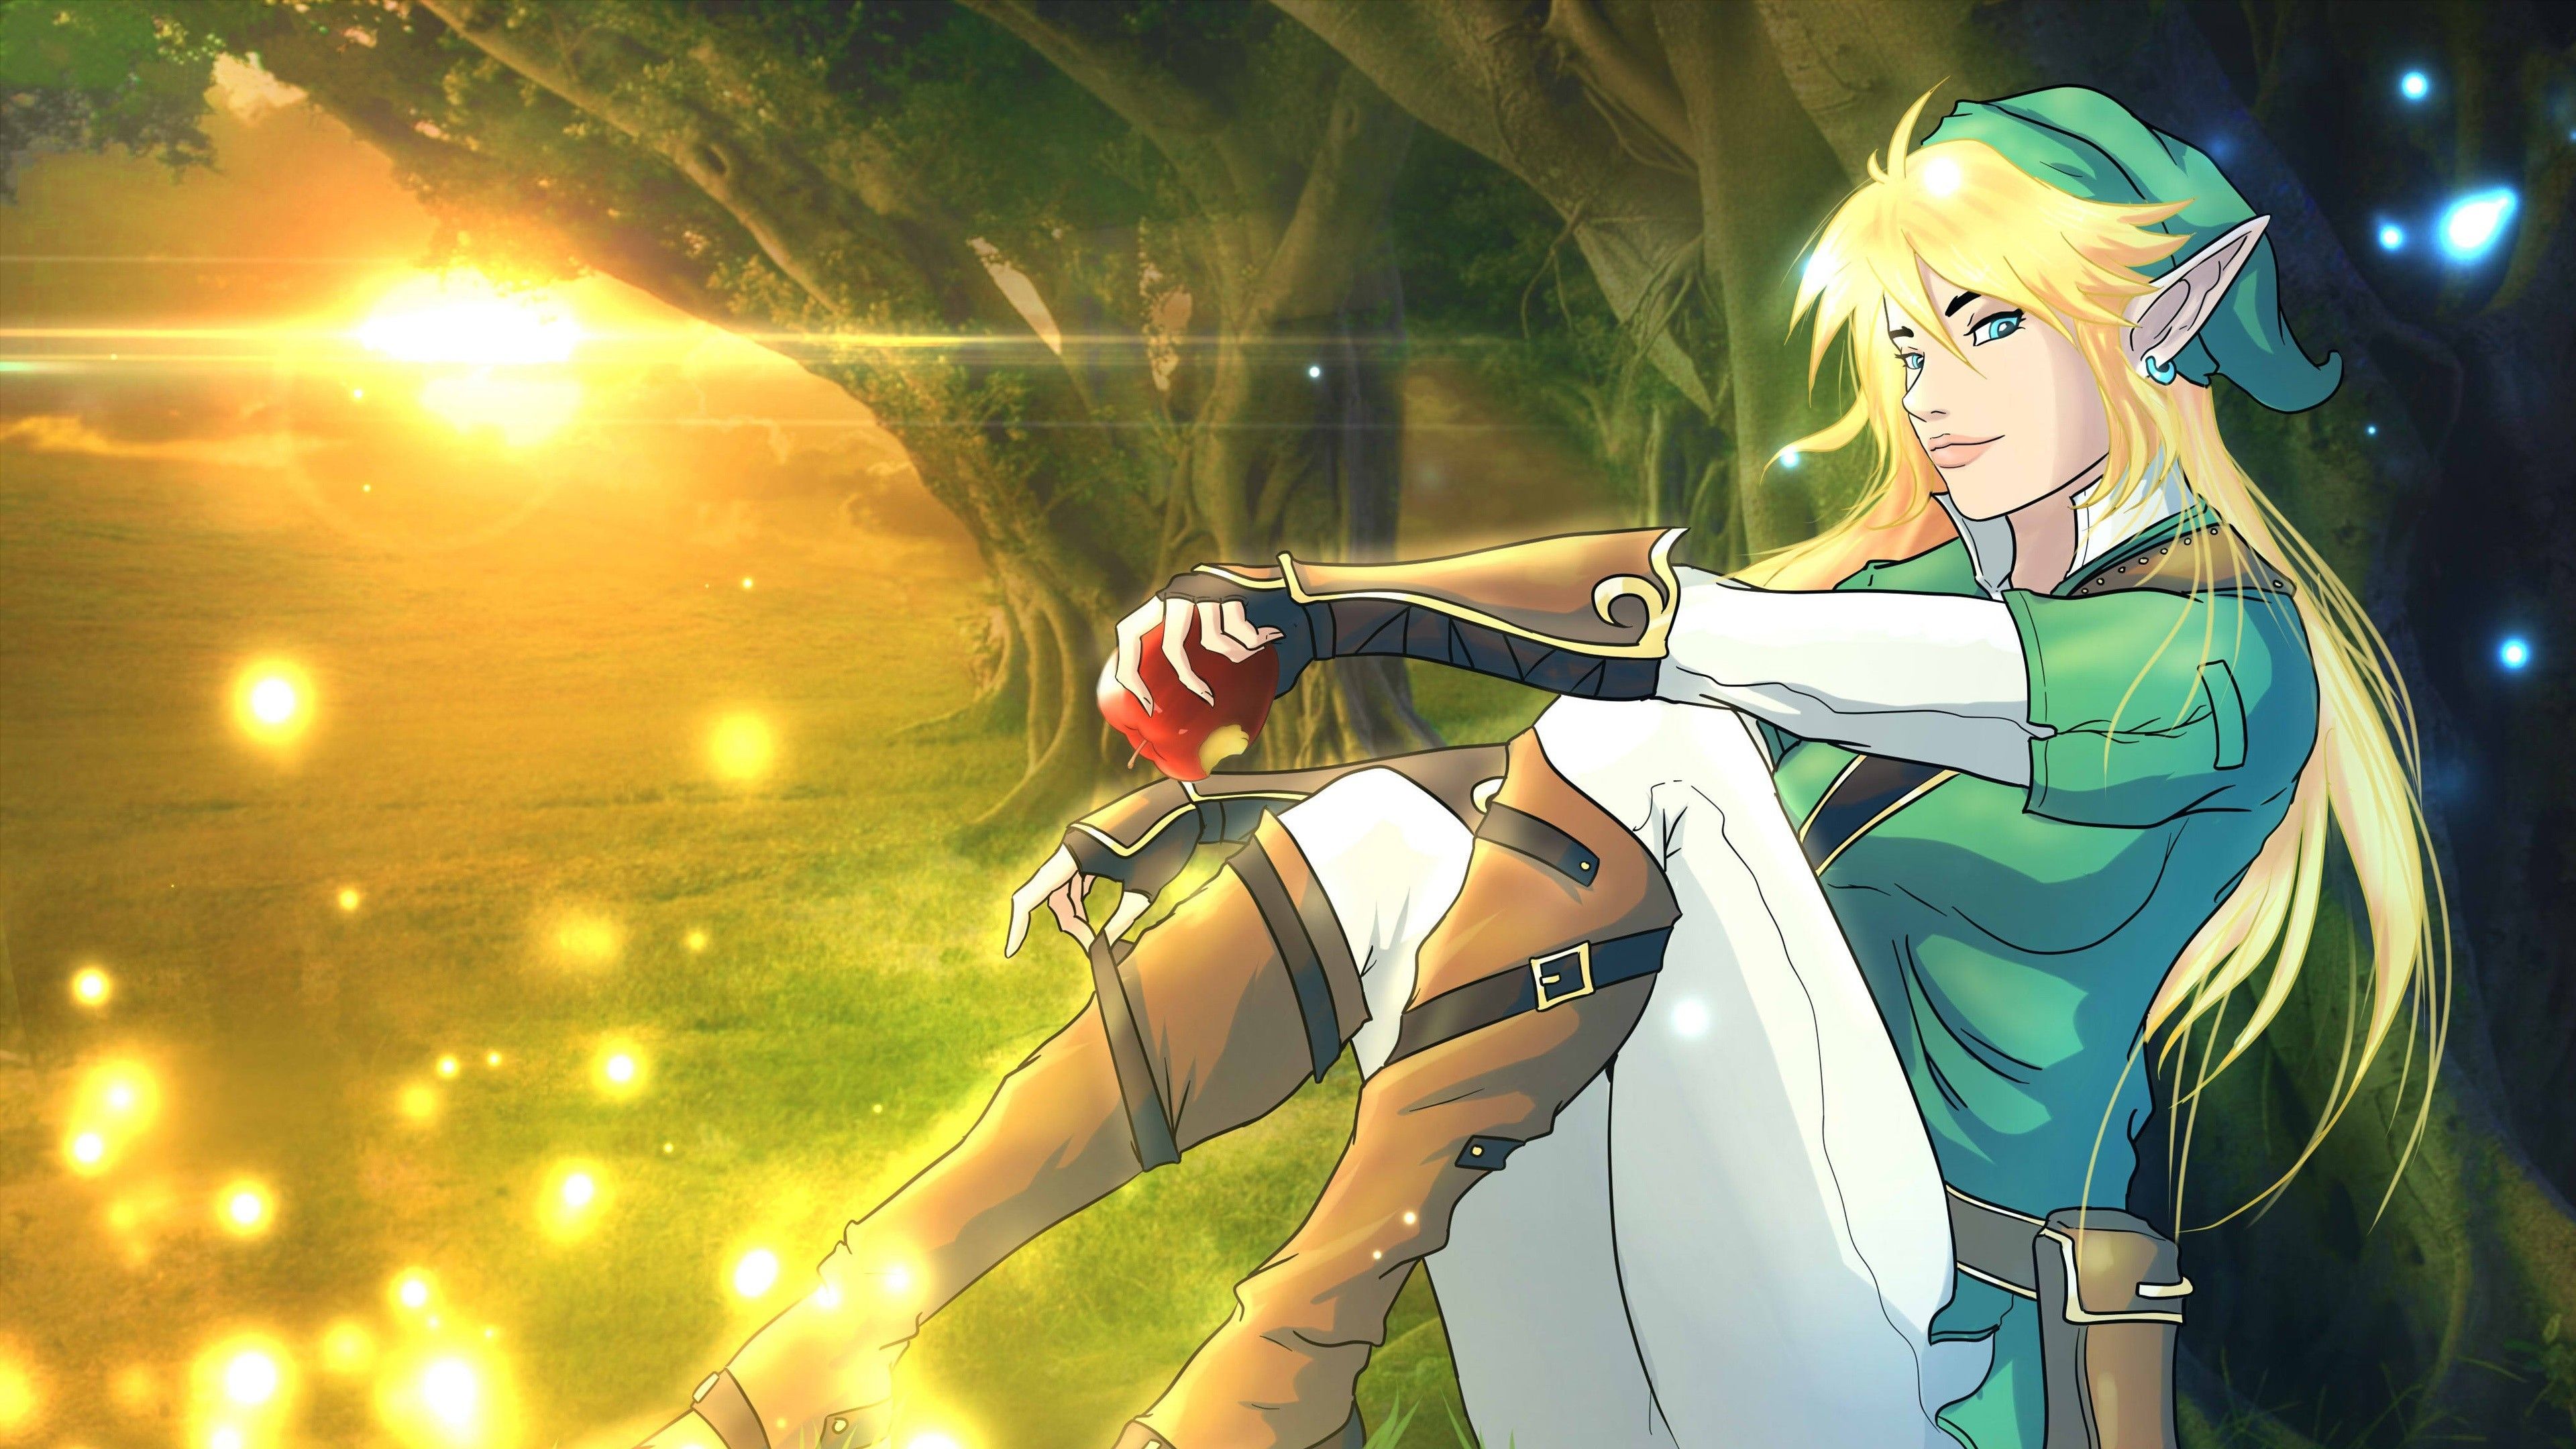 Chibi Legend Of Zelda Wallpapers - Wallpaper Cave Princess Zelda Chibi.